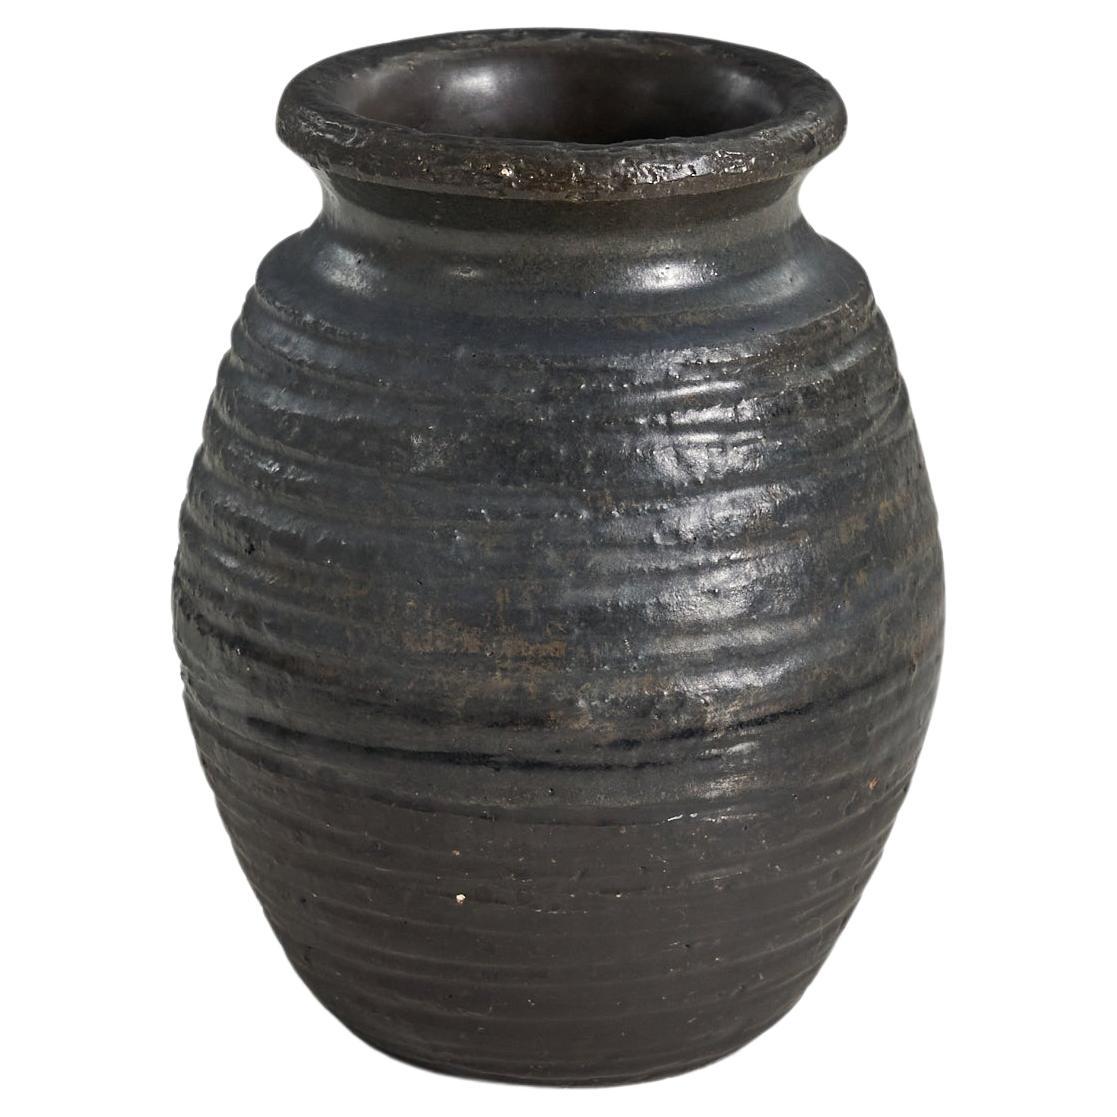 Gabriel Keramik, Vase, Black-Glazed Earthenware, Sweden, c. 1940s